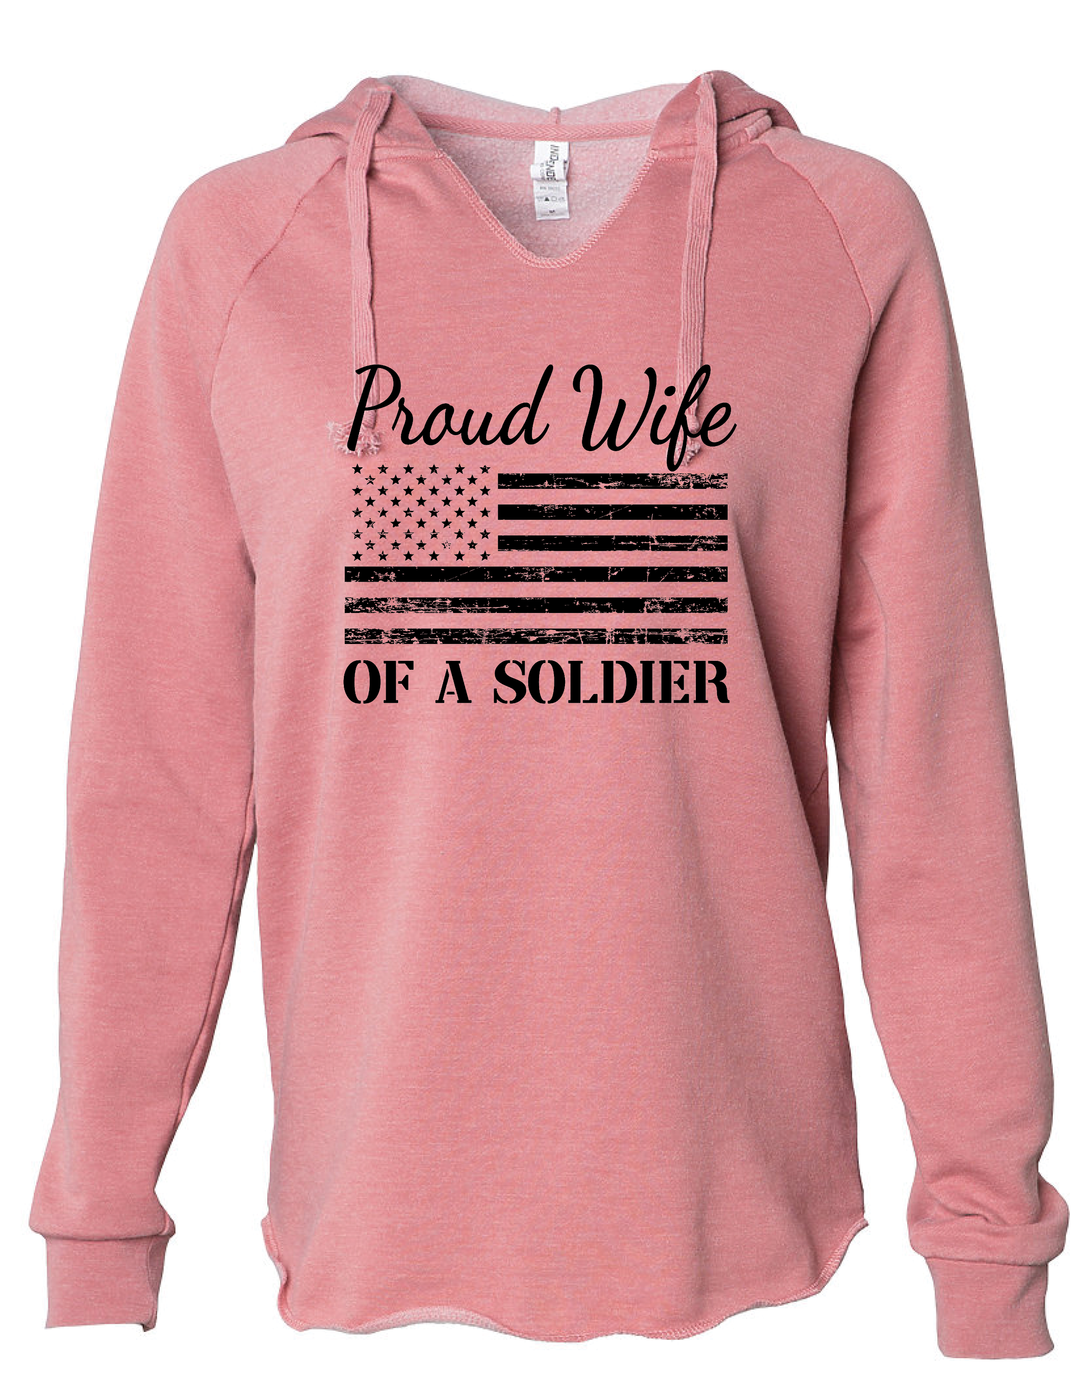 Proud Wife of a Soldier Sweatshirt (Pink)